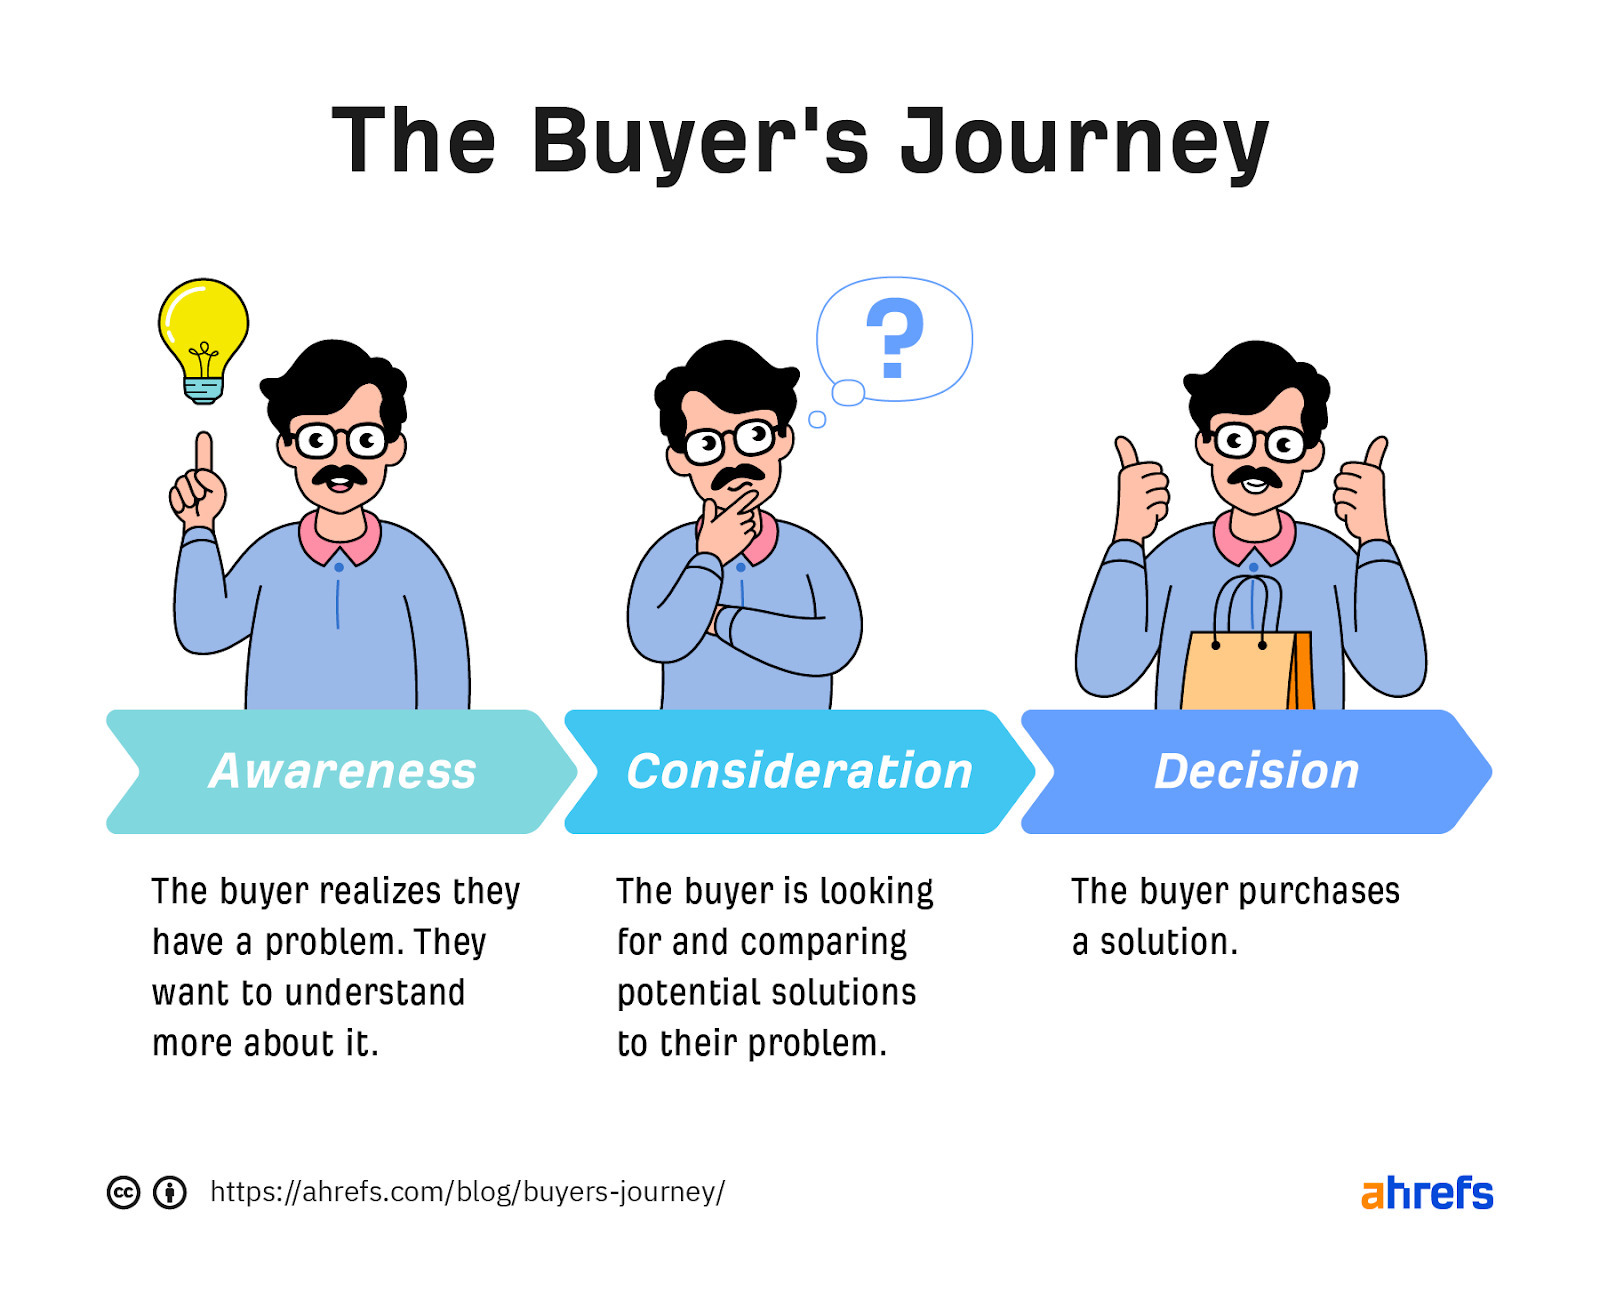 The buyer's journey